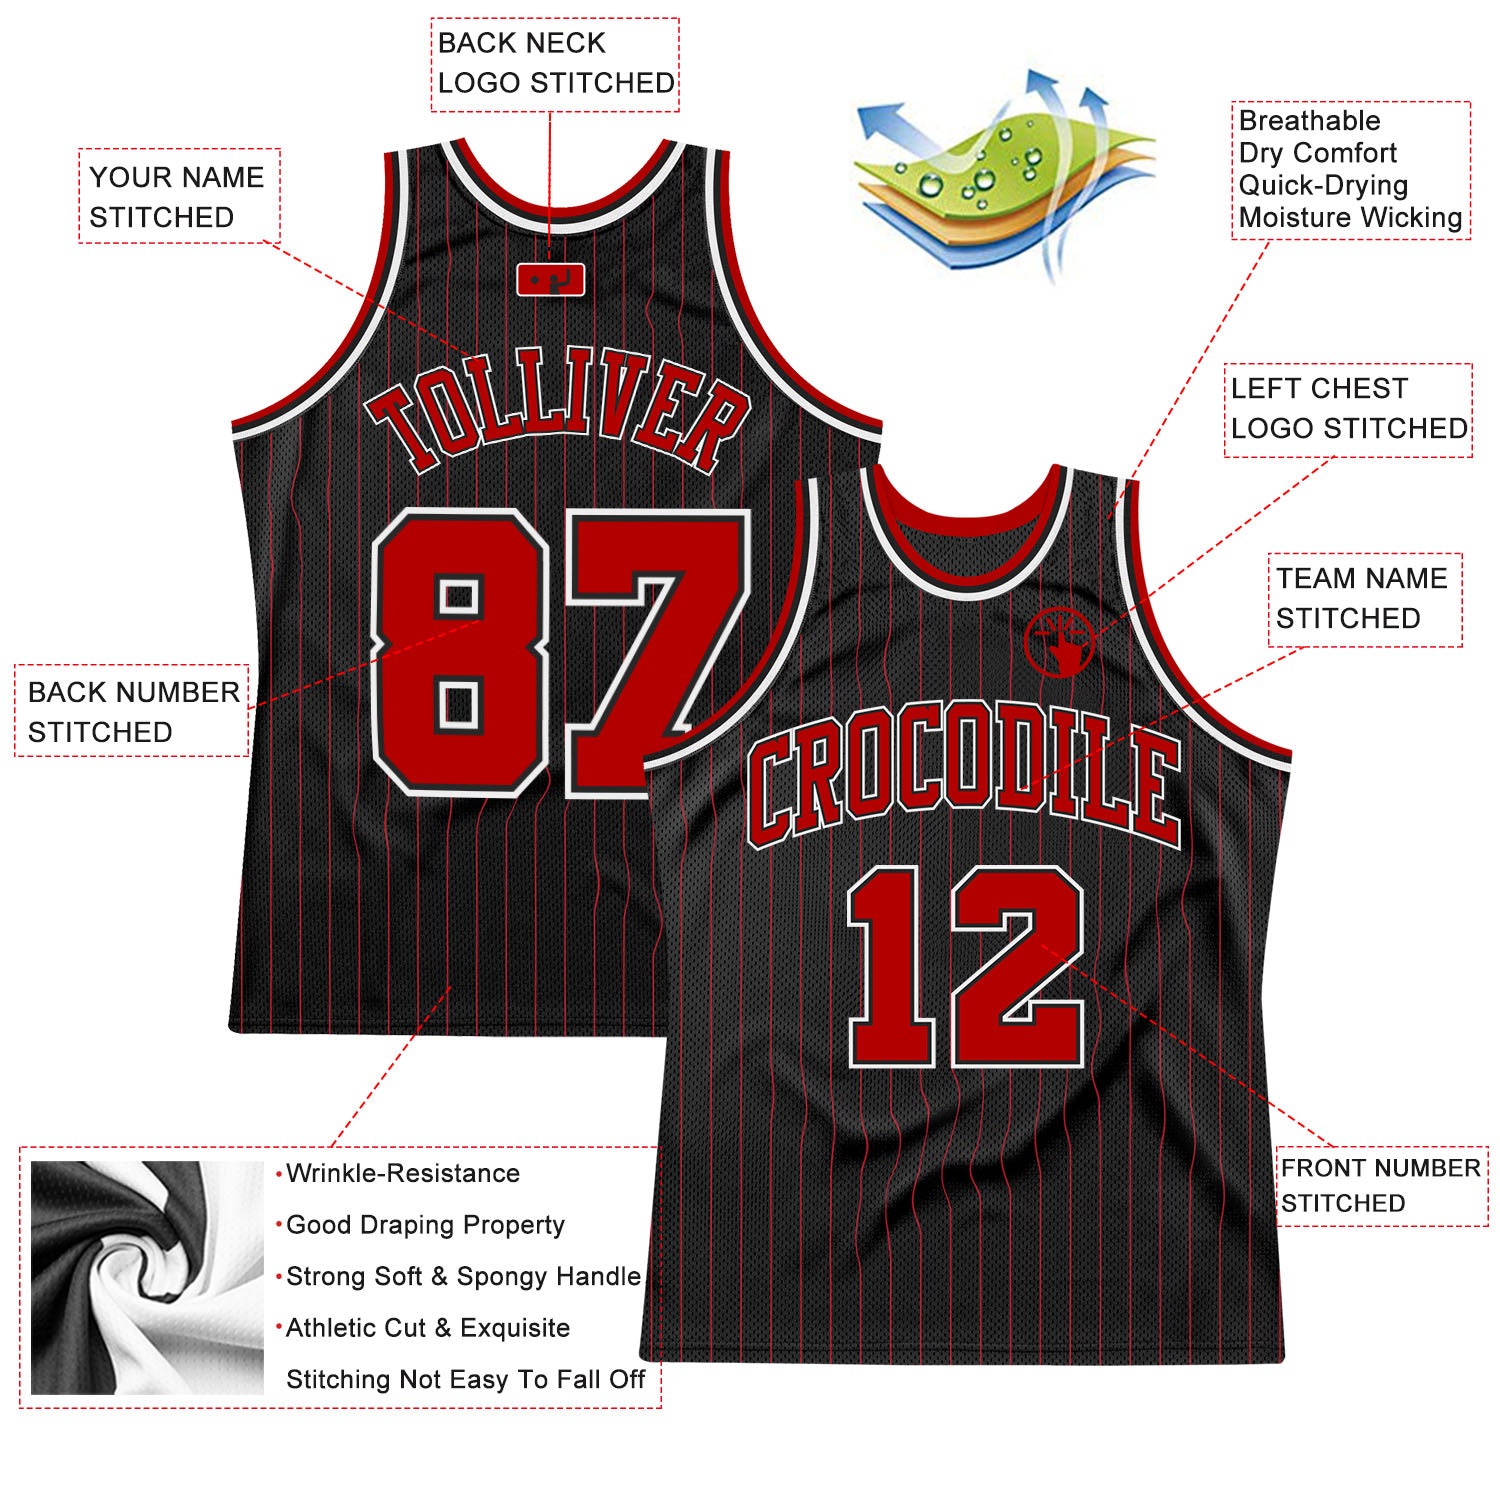 FANSIDEA Custom Black Red-White Round Neck Rib-Knit Basketball Jersey Men's Size:3XL